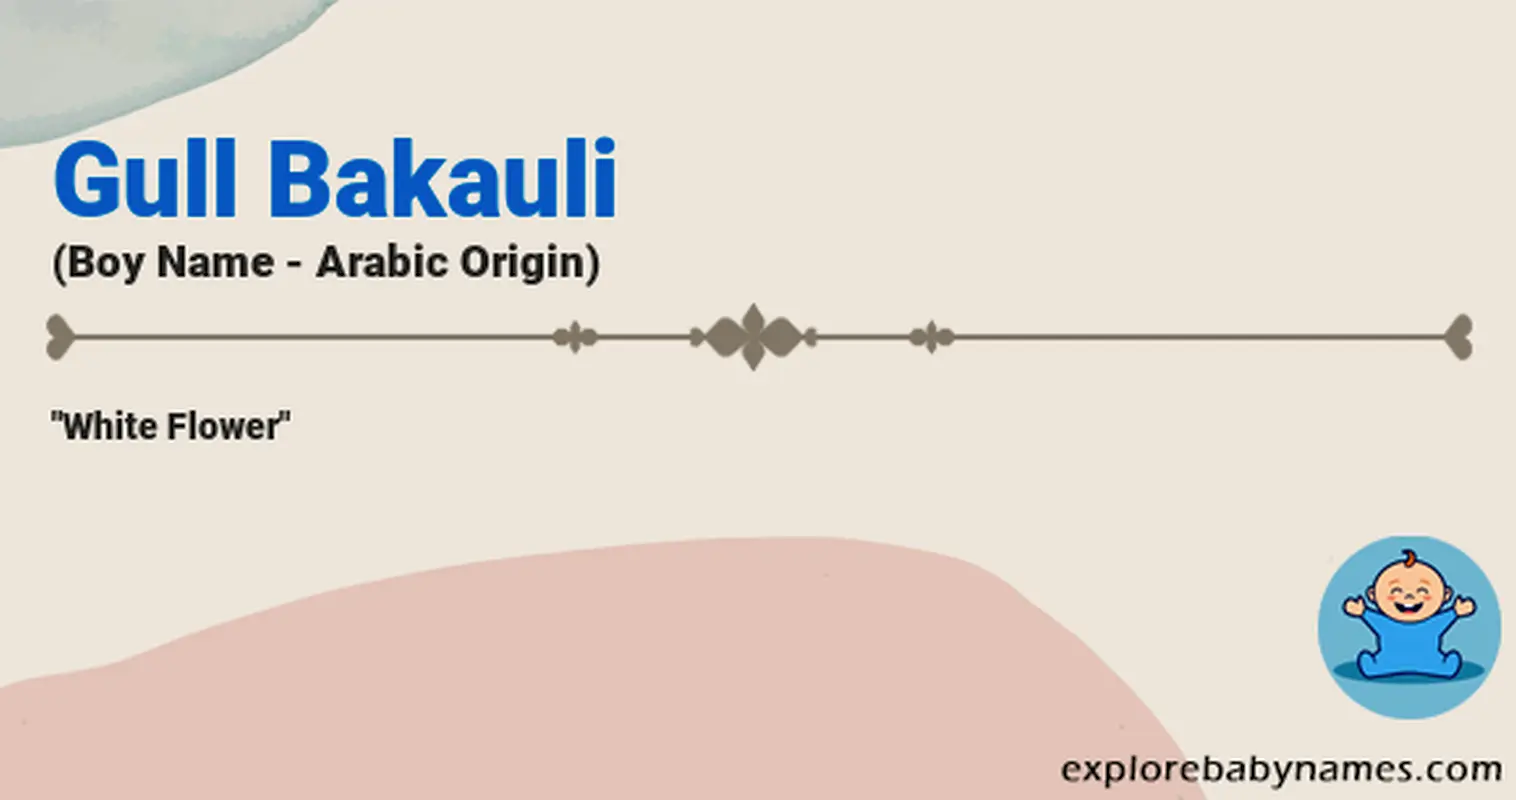 Meaning of Gull Bakauli